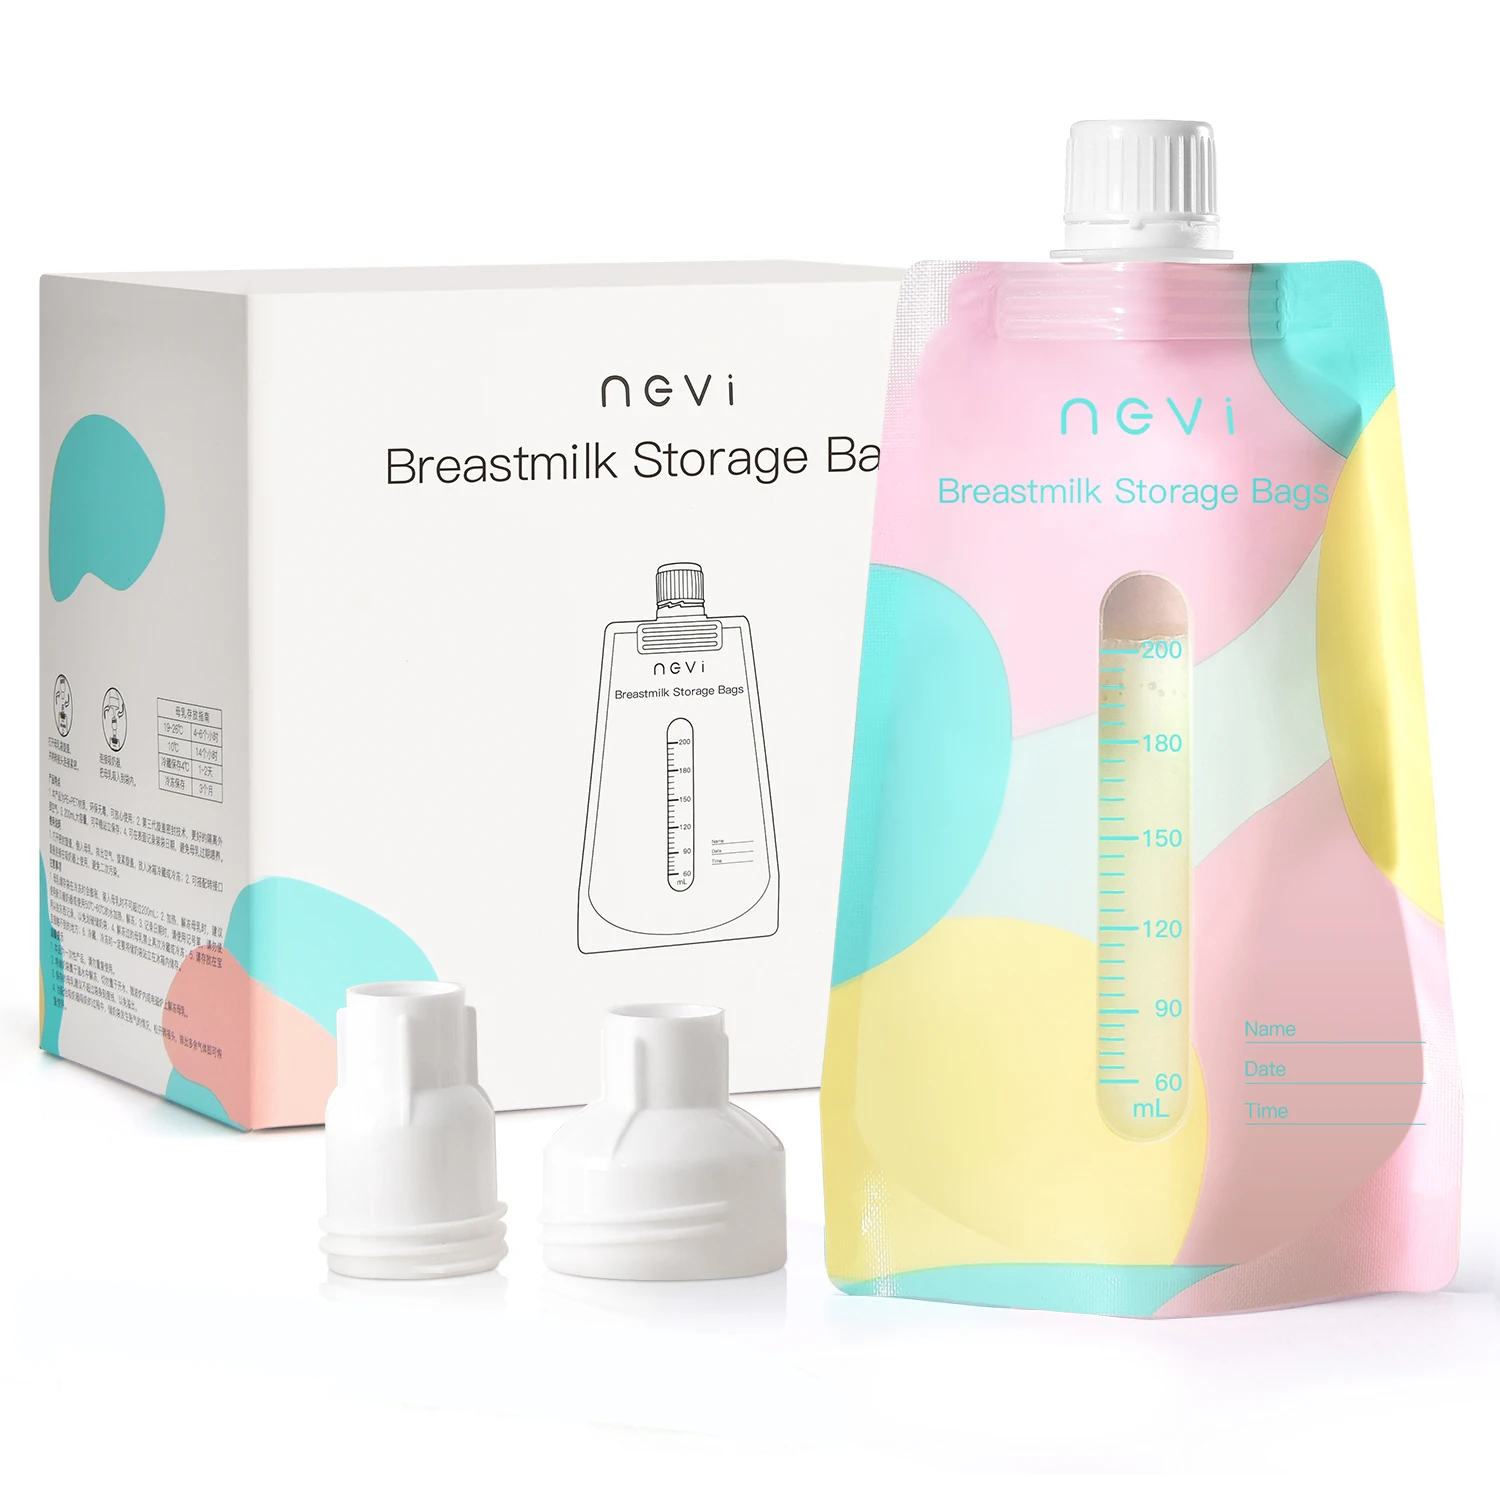 NCVI Breastmilk Storage Bags, 90 Count Milk Storage Bags for